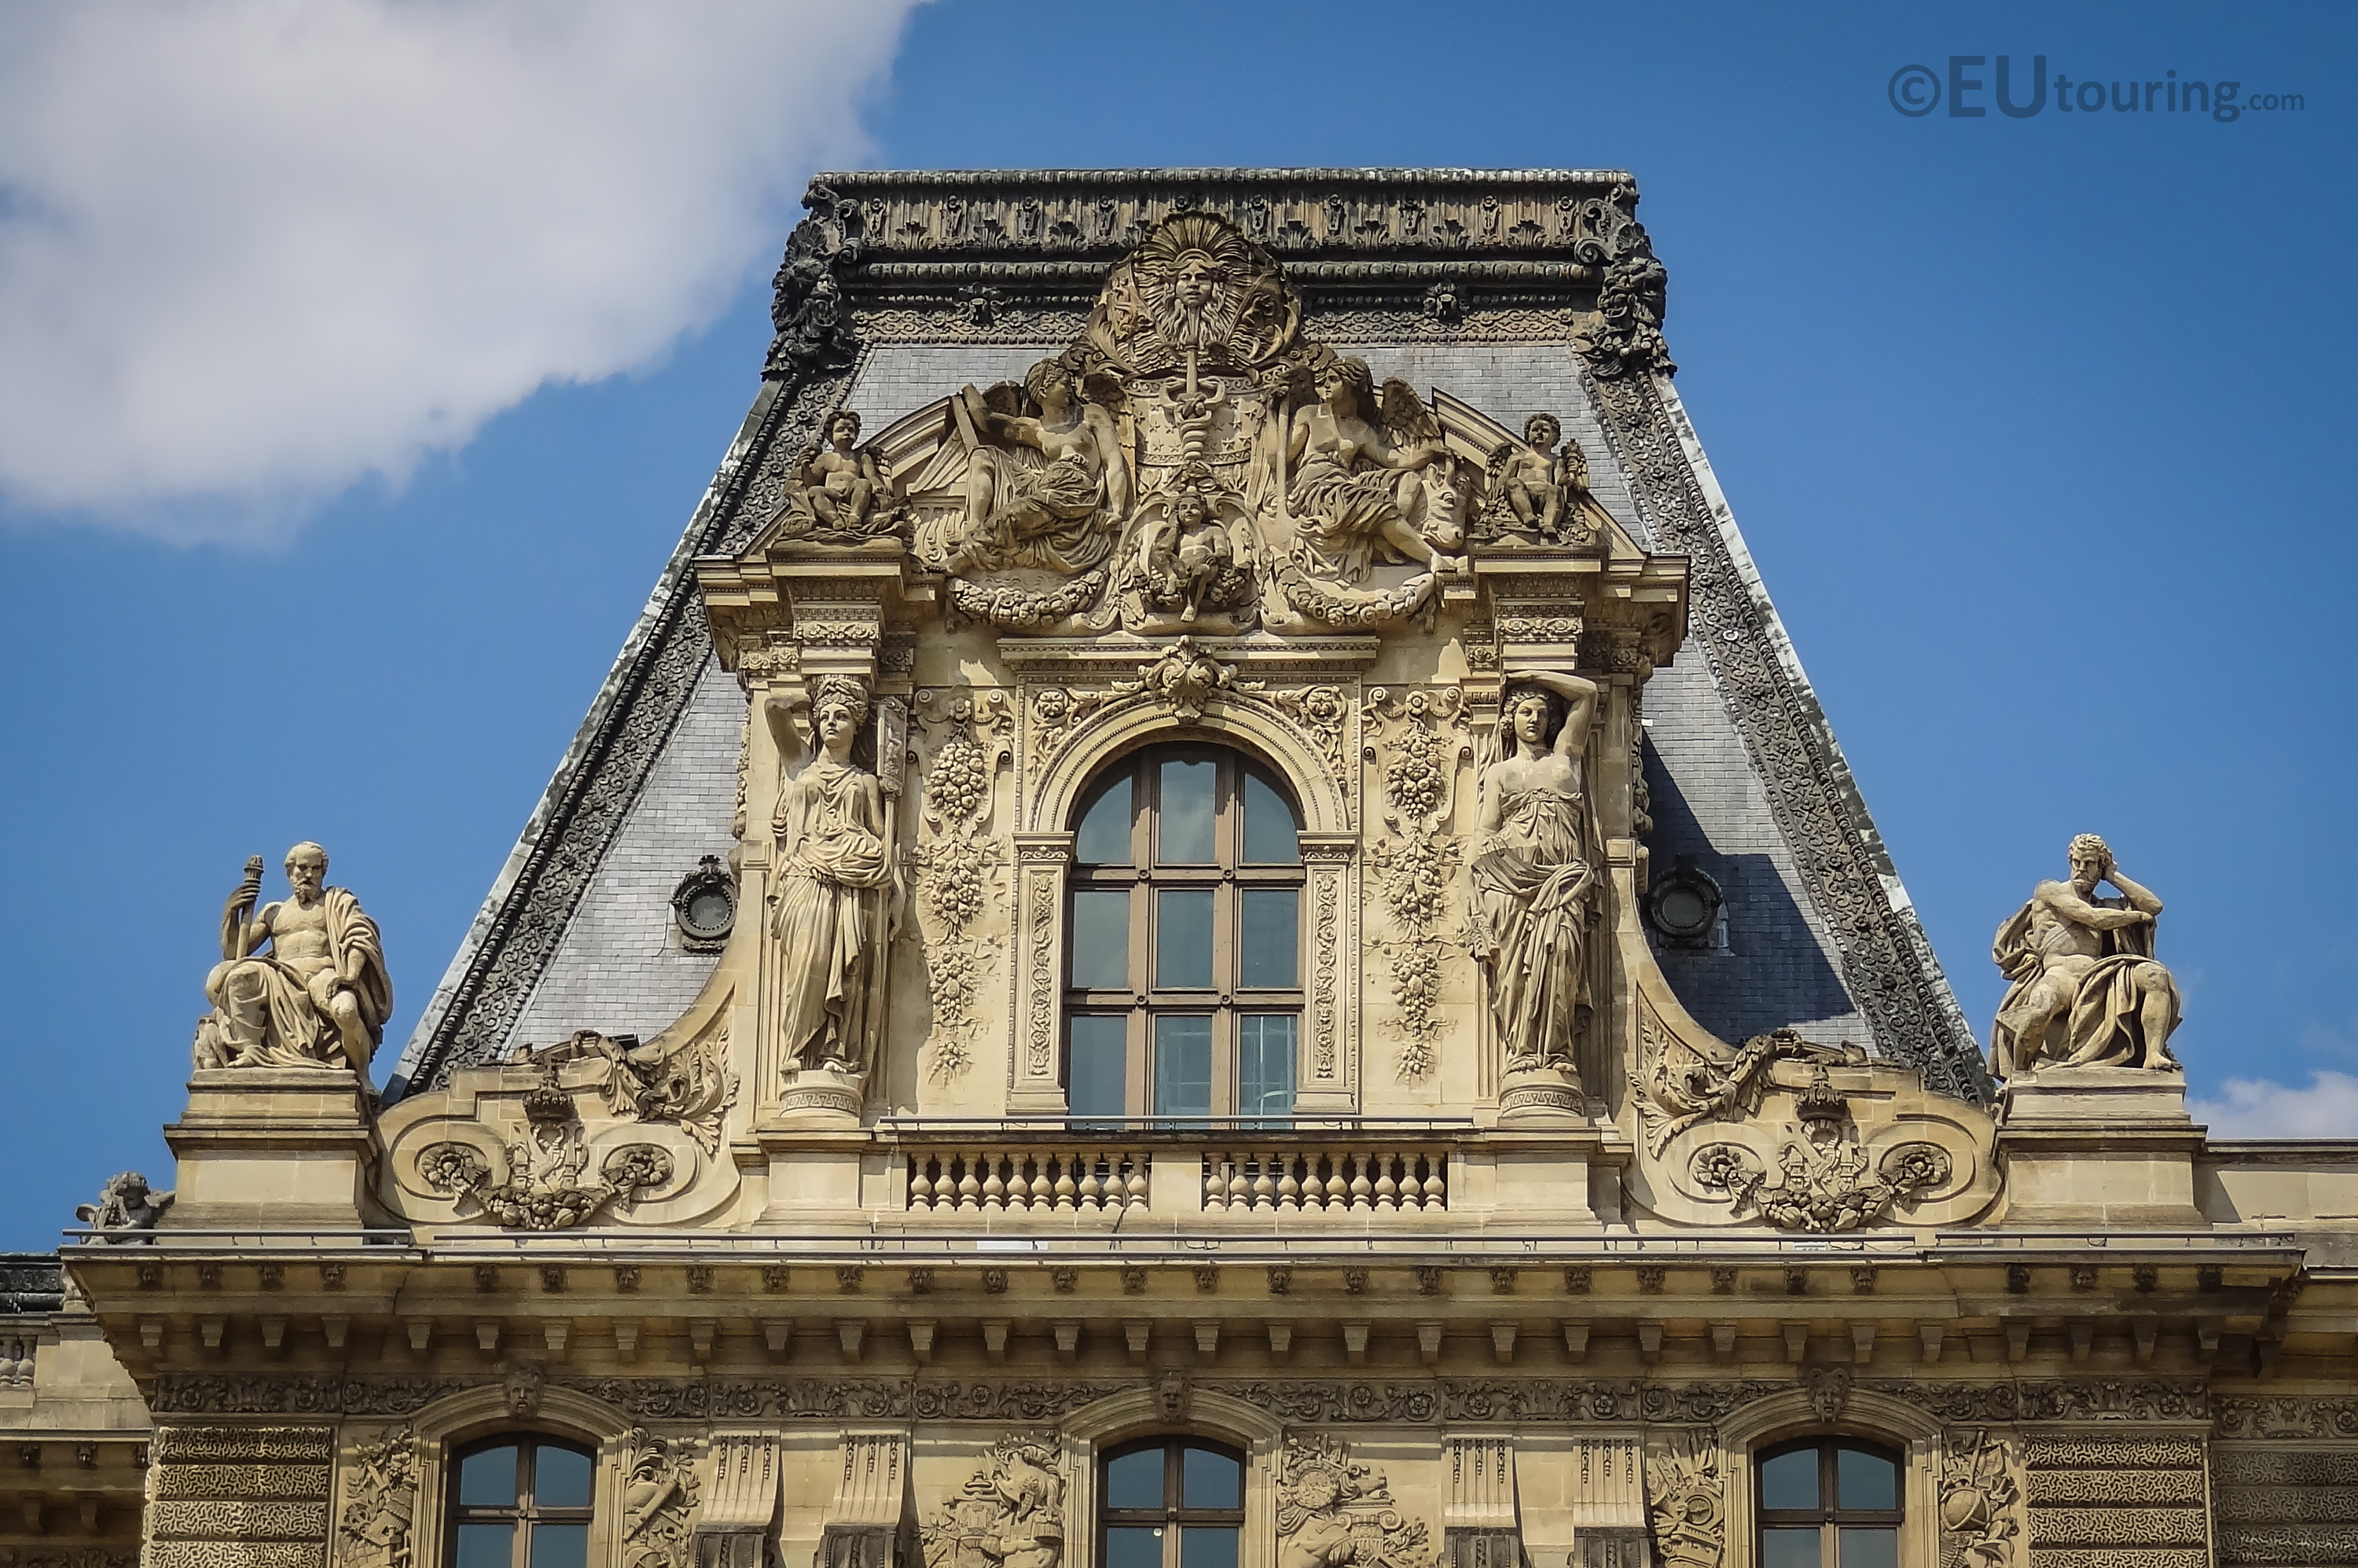 Louvre Palace architectural details